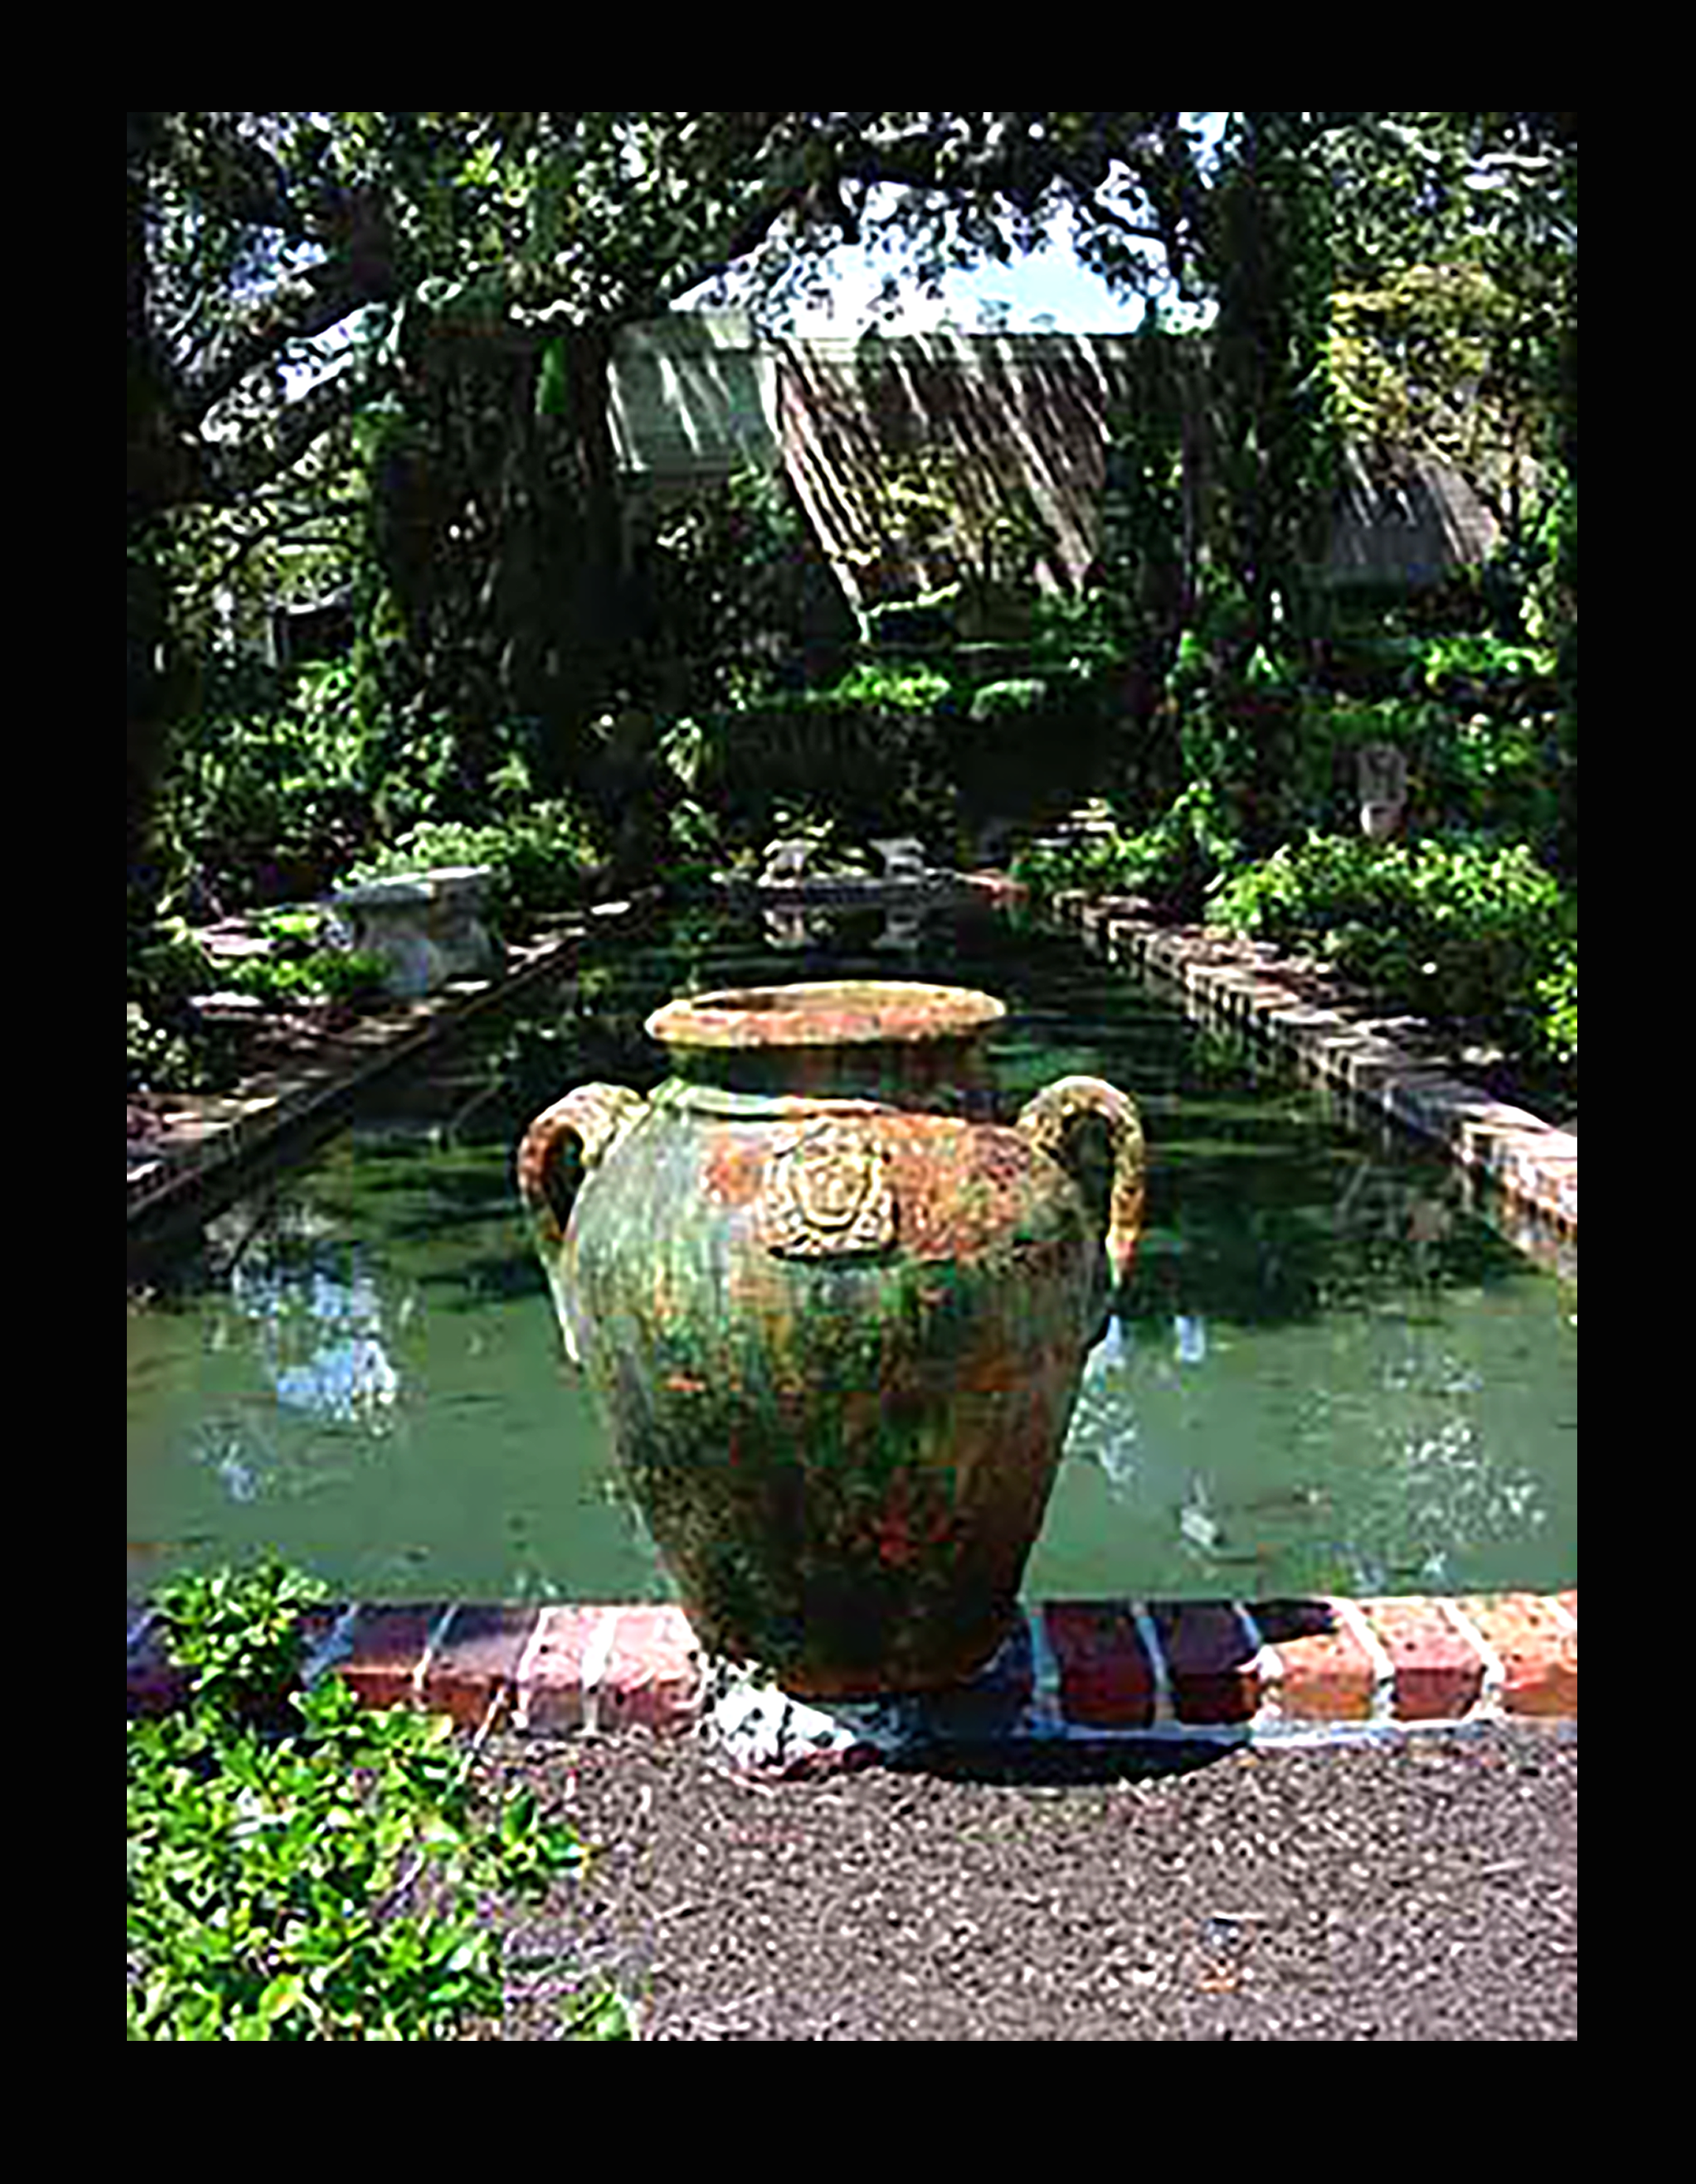 Ceramic Pot and Pool, Cummer Garden, Jacksonville, Florida